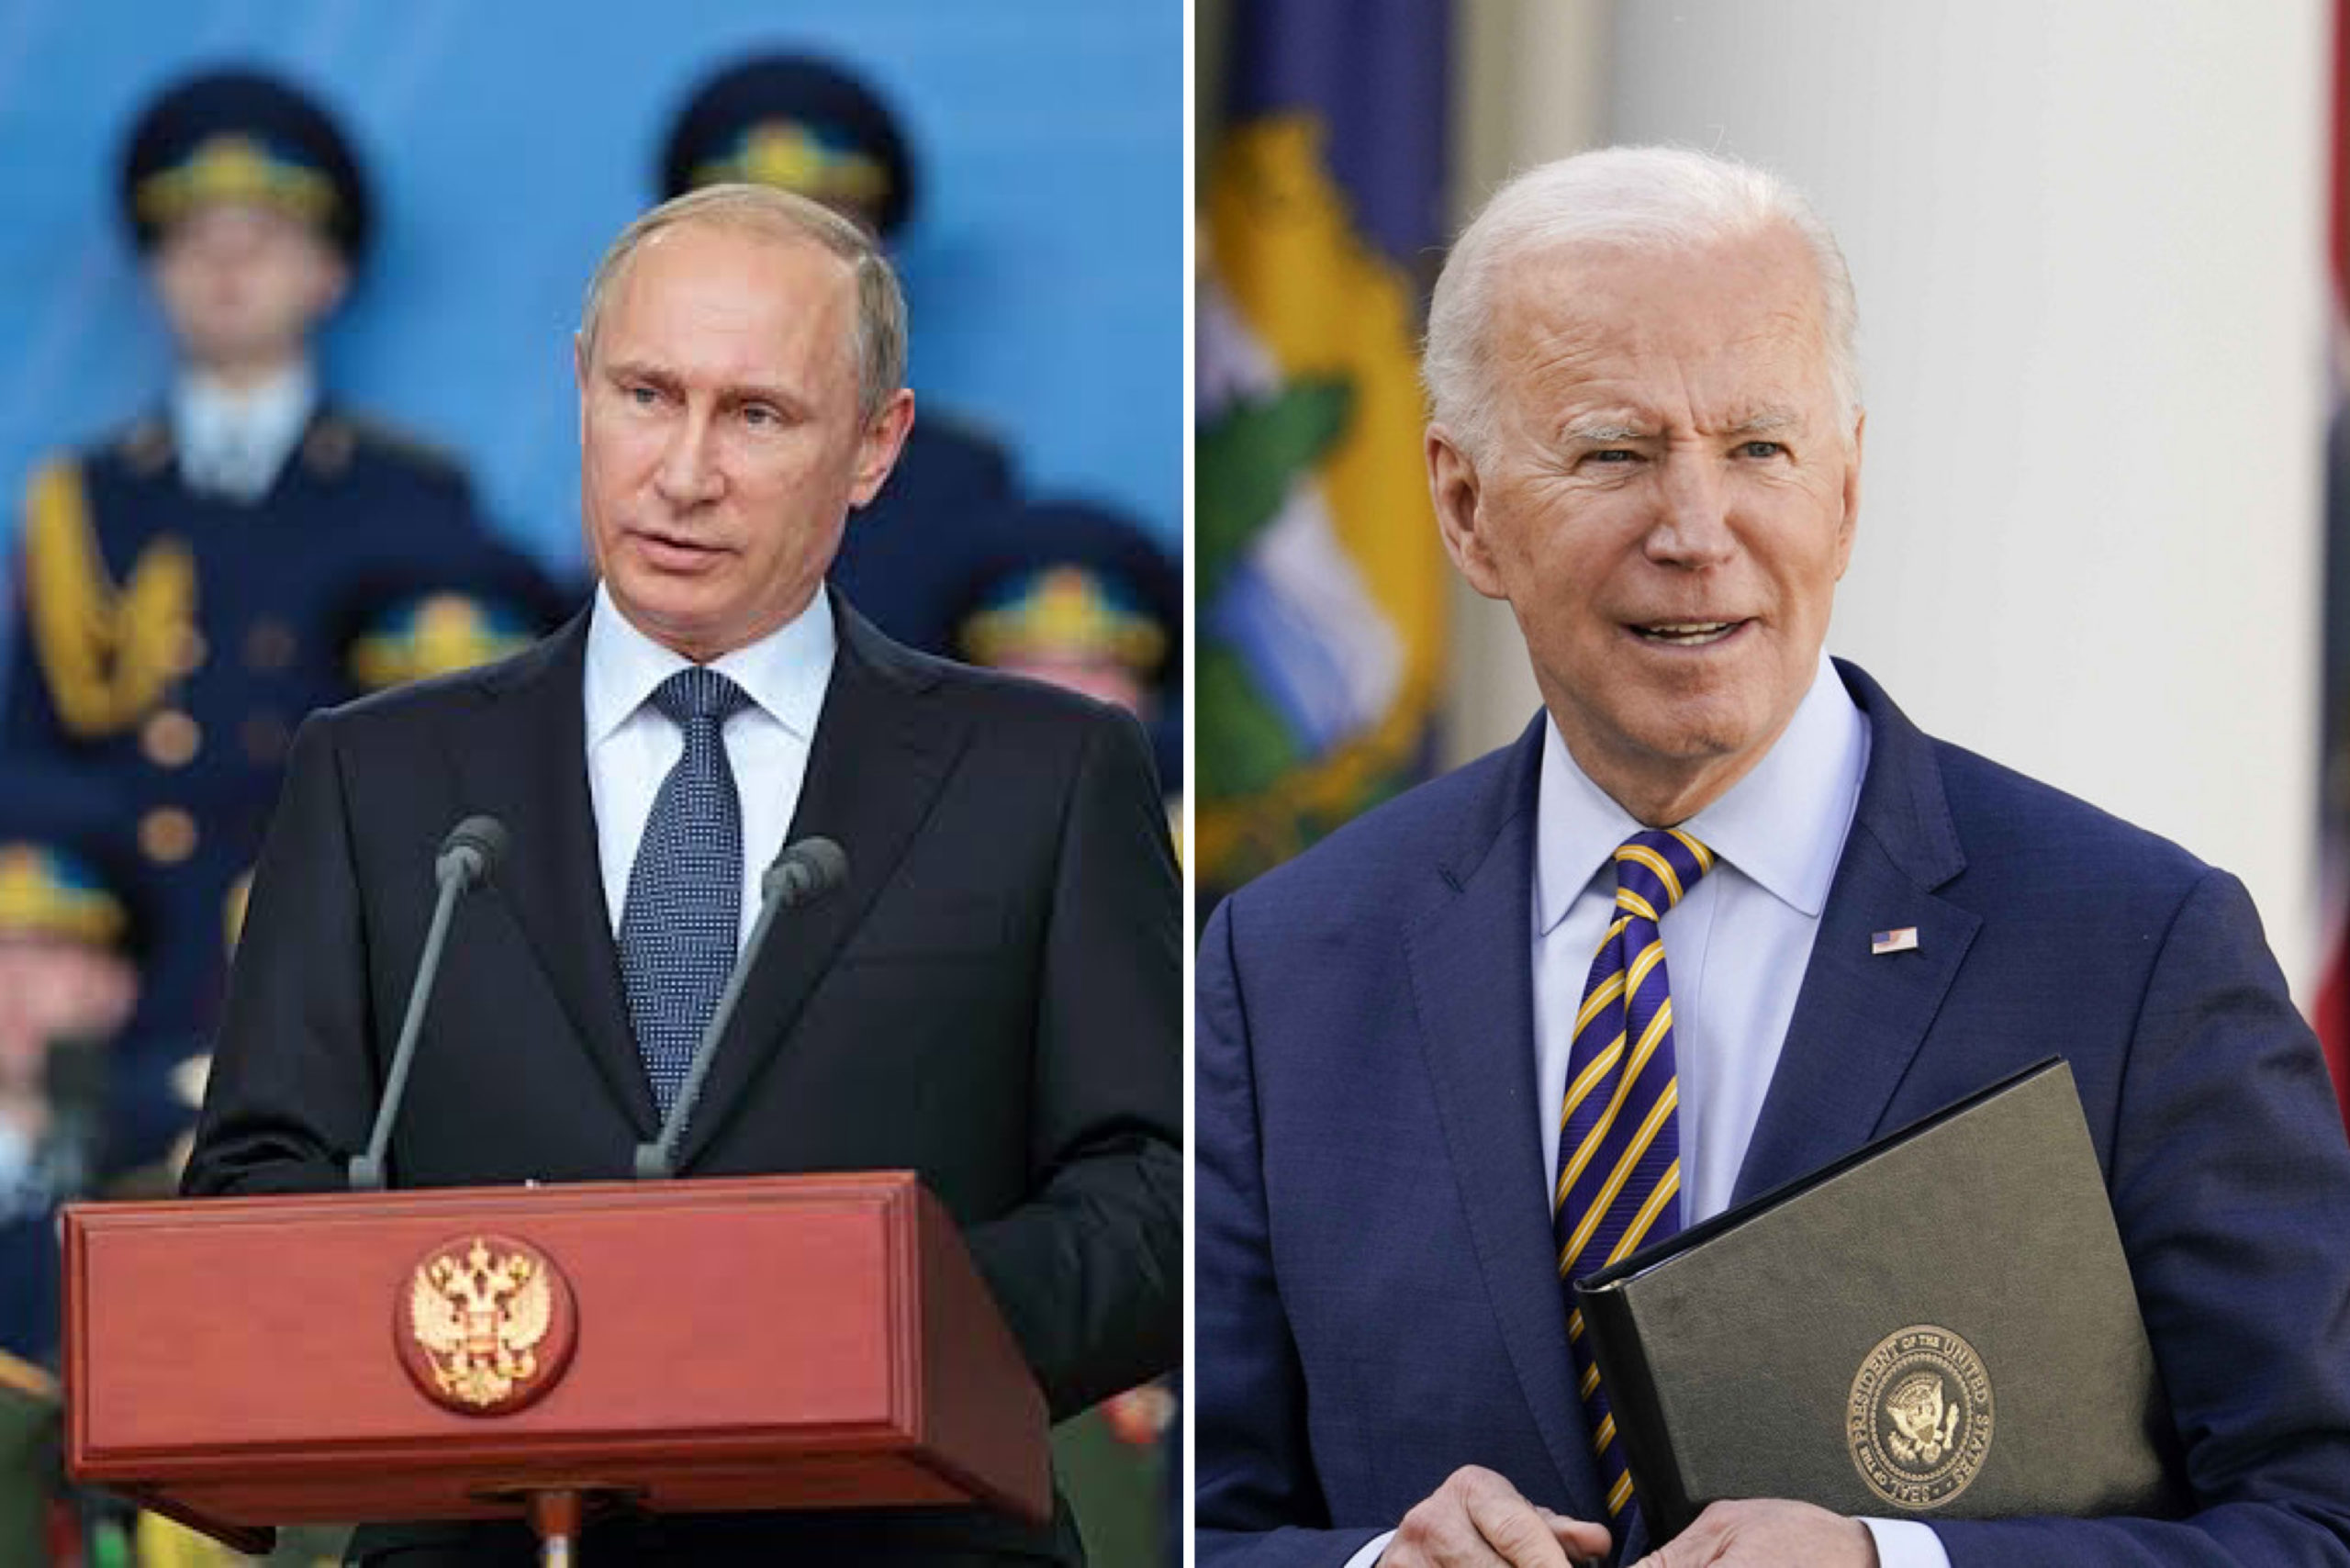 ‘It Takes One To Know One’ - Putin Reacts To Biden Calling Him A Killer